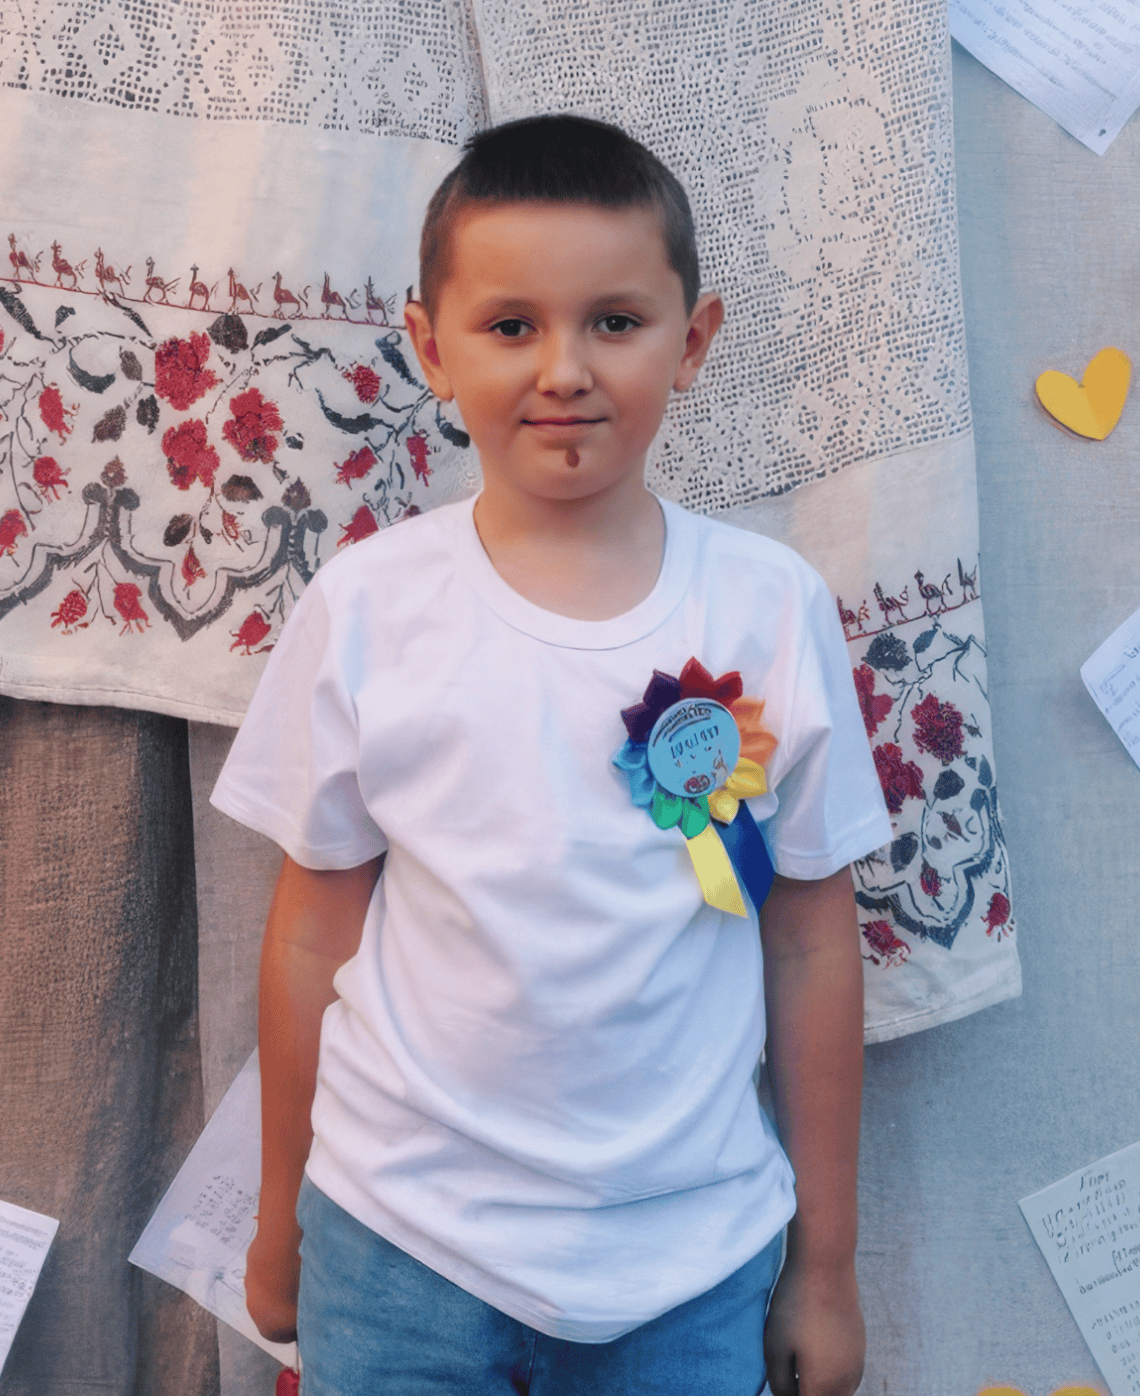 Mykola from Kharkiv, 7-year-old